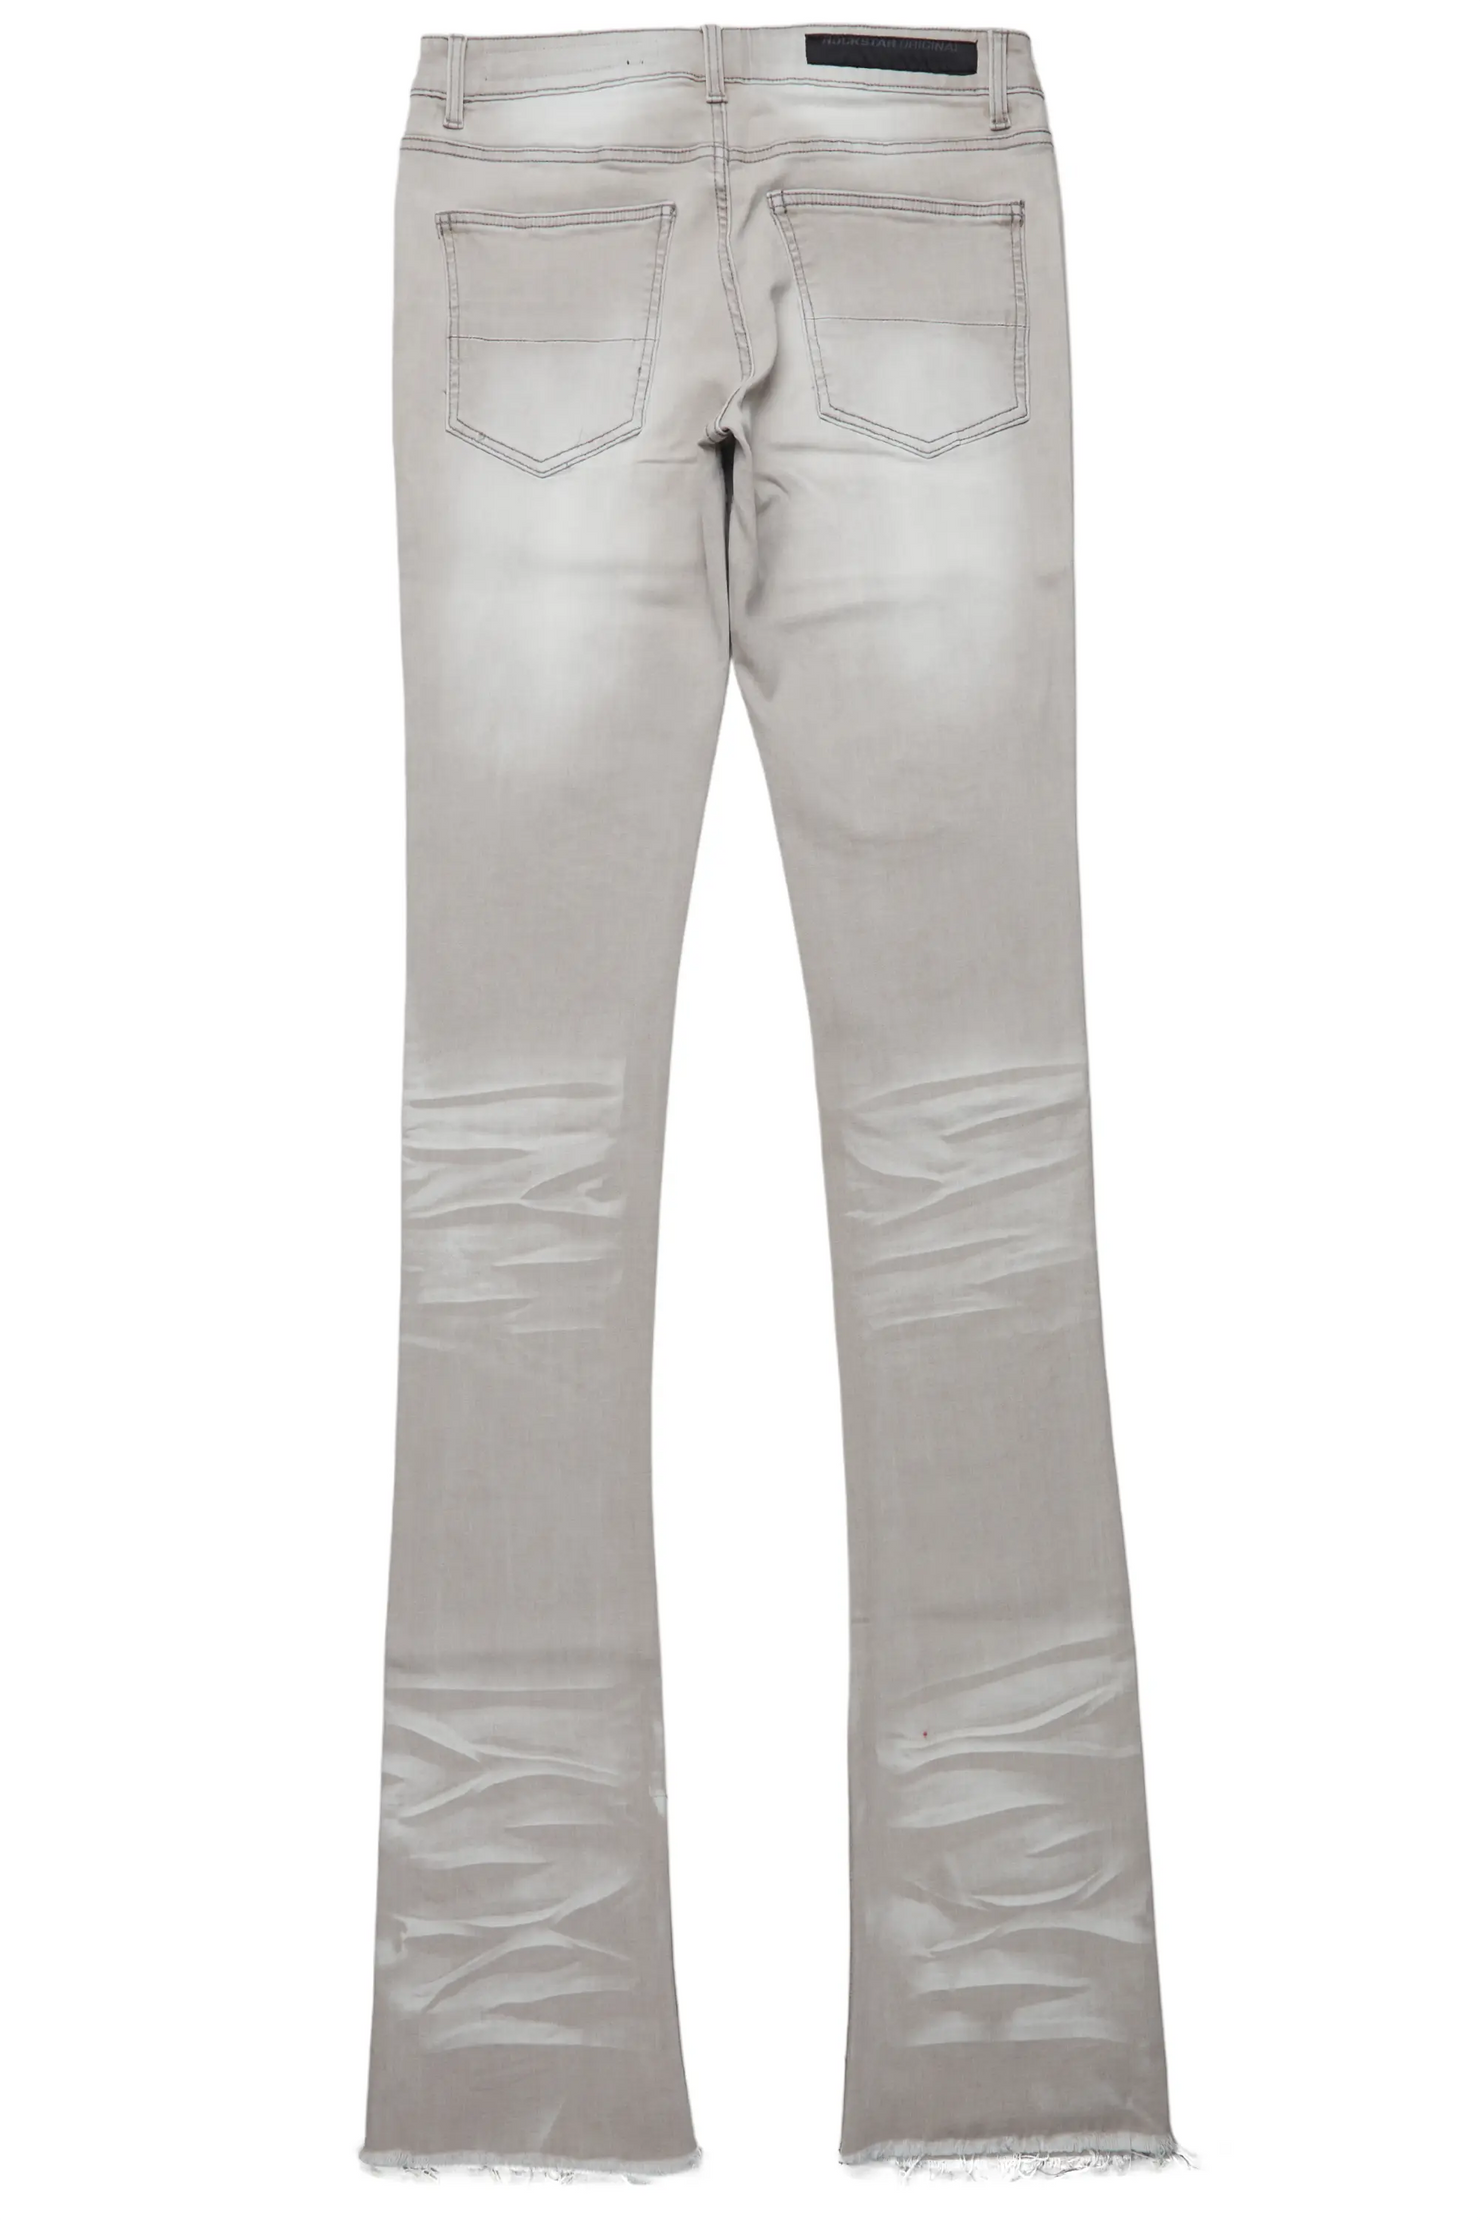 Cato Grey Super Stacked Flare Jean